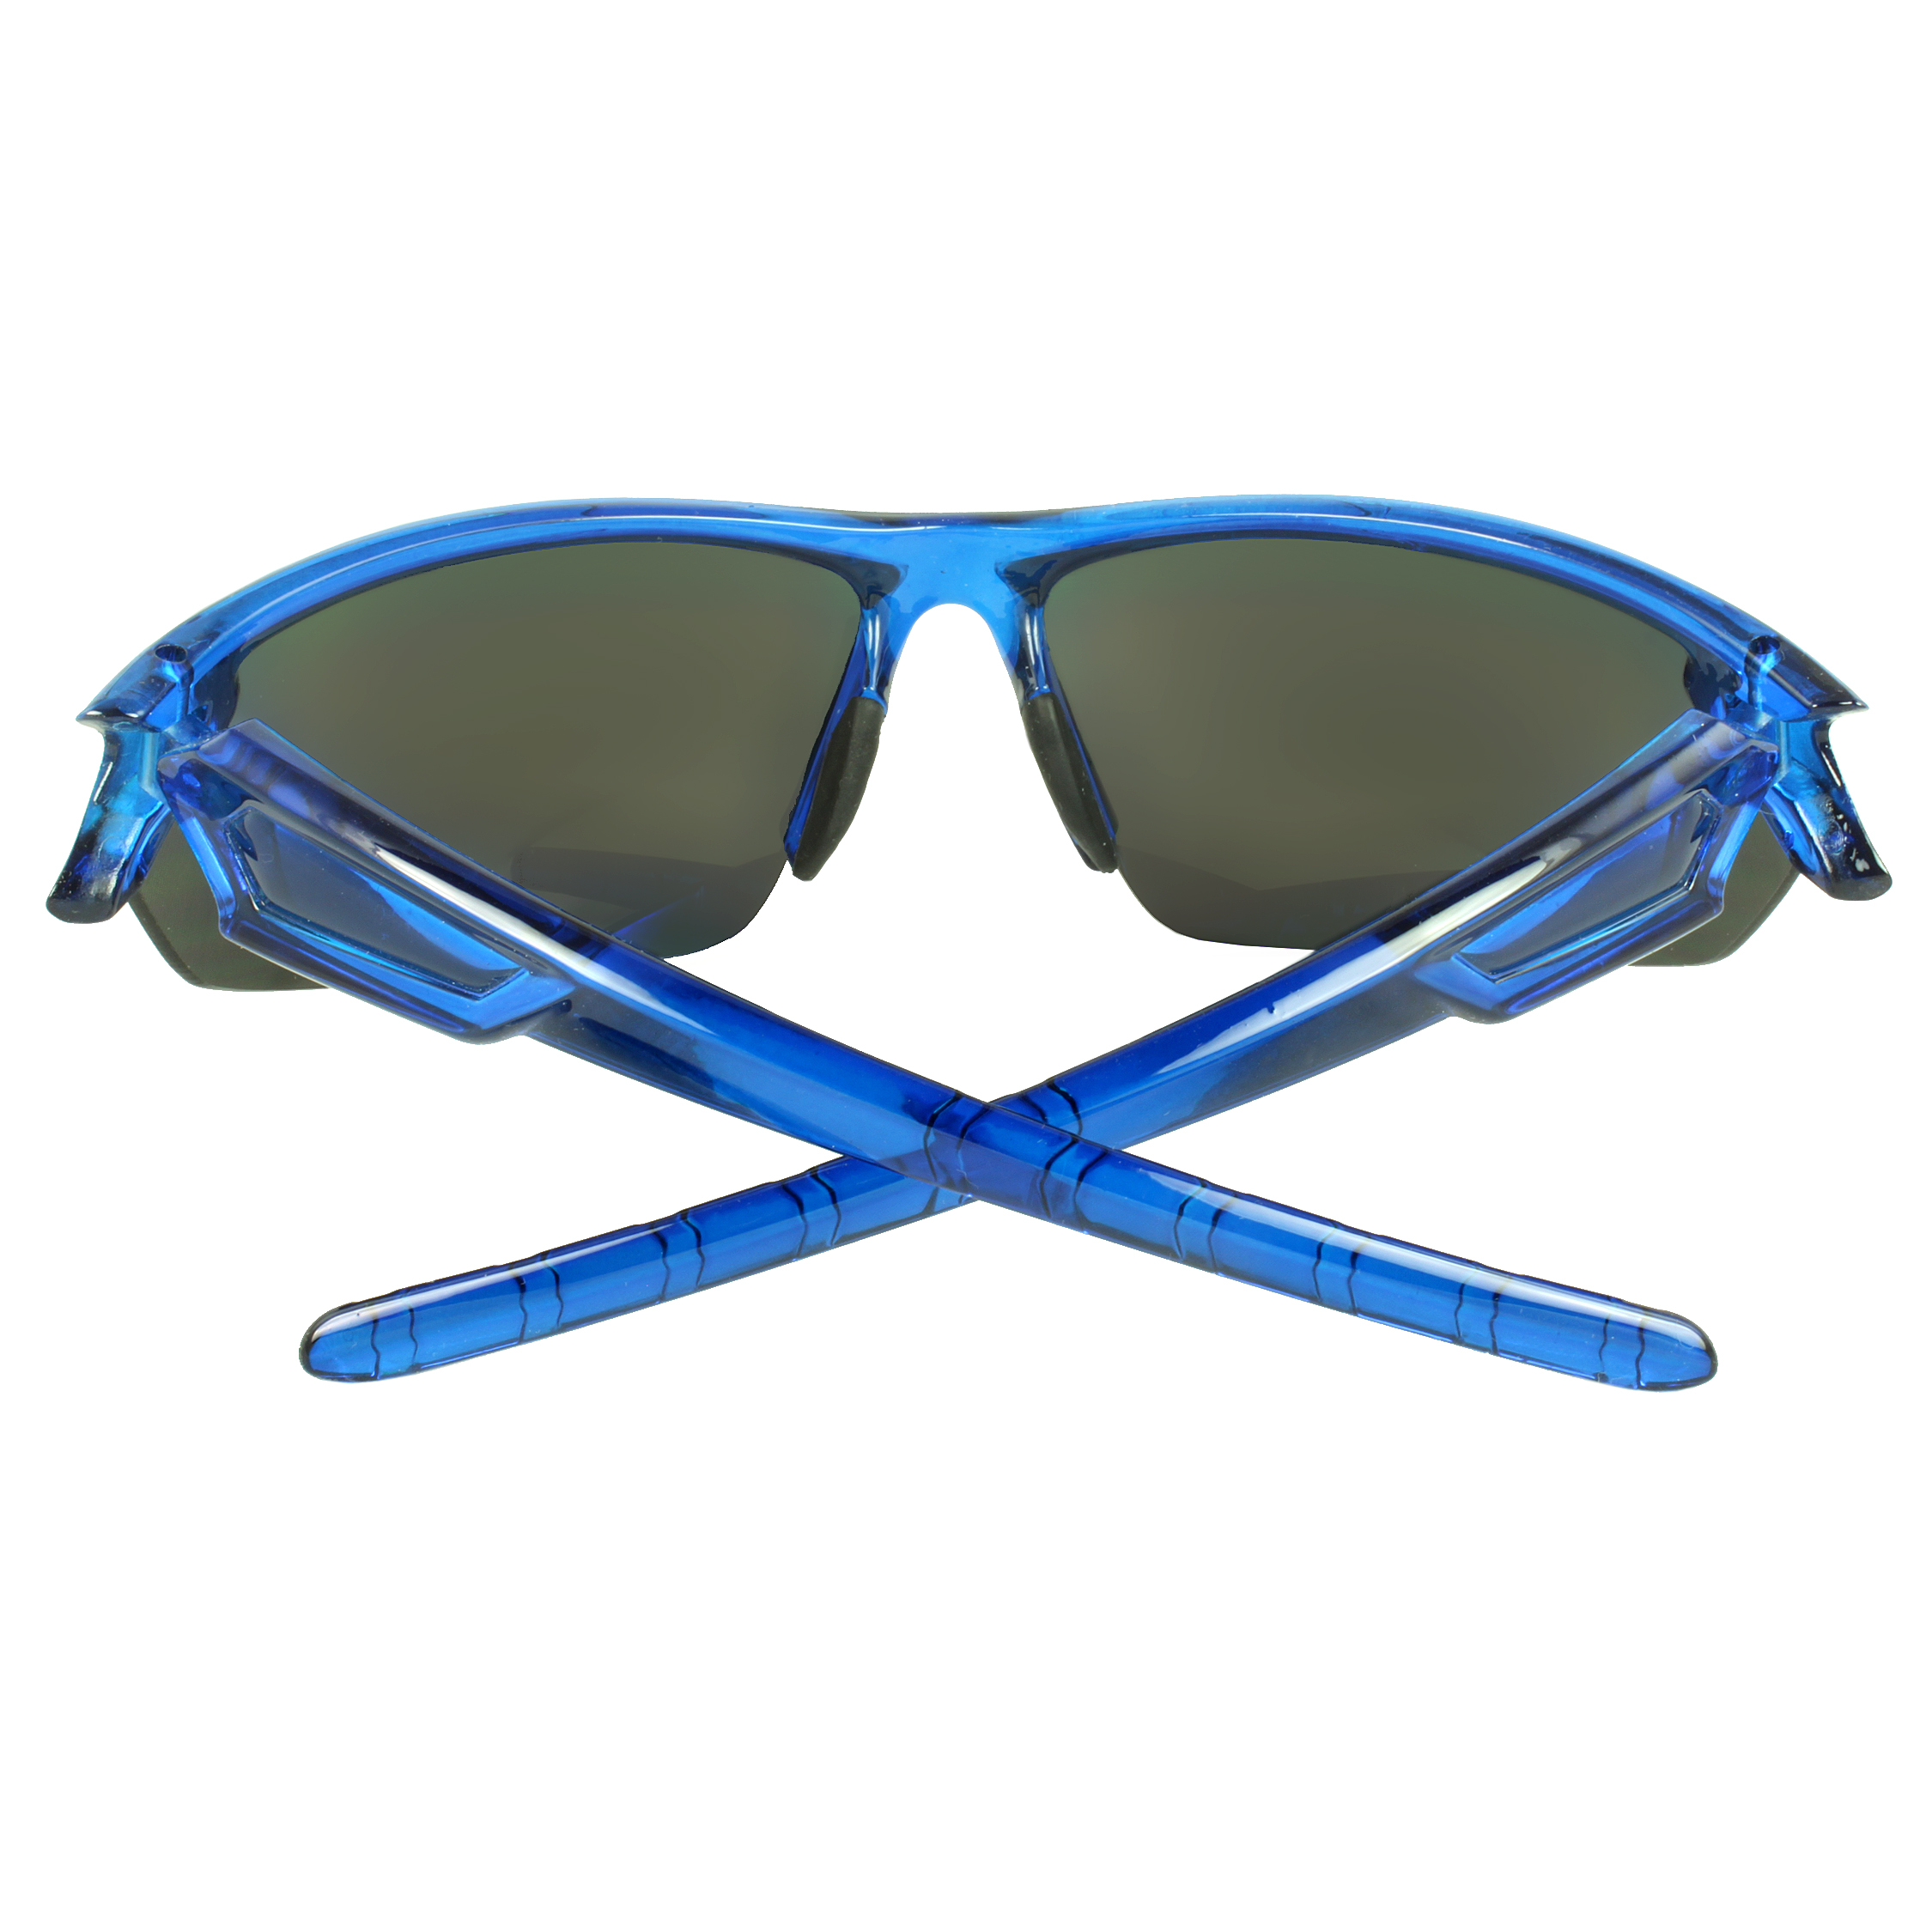 MLC Eyewear TU7060M-BUMR Wrap Fashion Sunglasses Blue Frame Mirror Lenses with Comfortable Rubber Cushion Pad - image 2 of 2